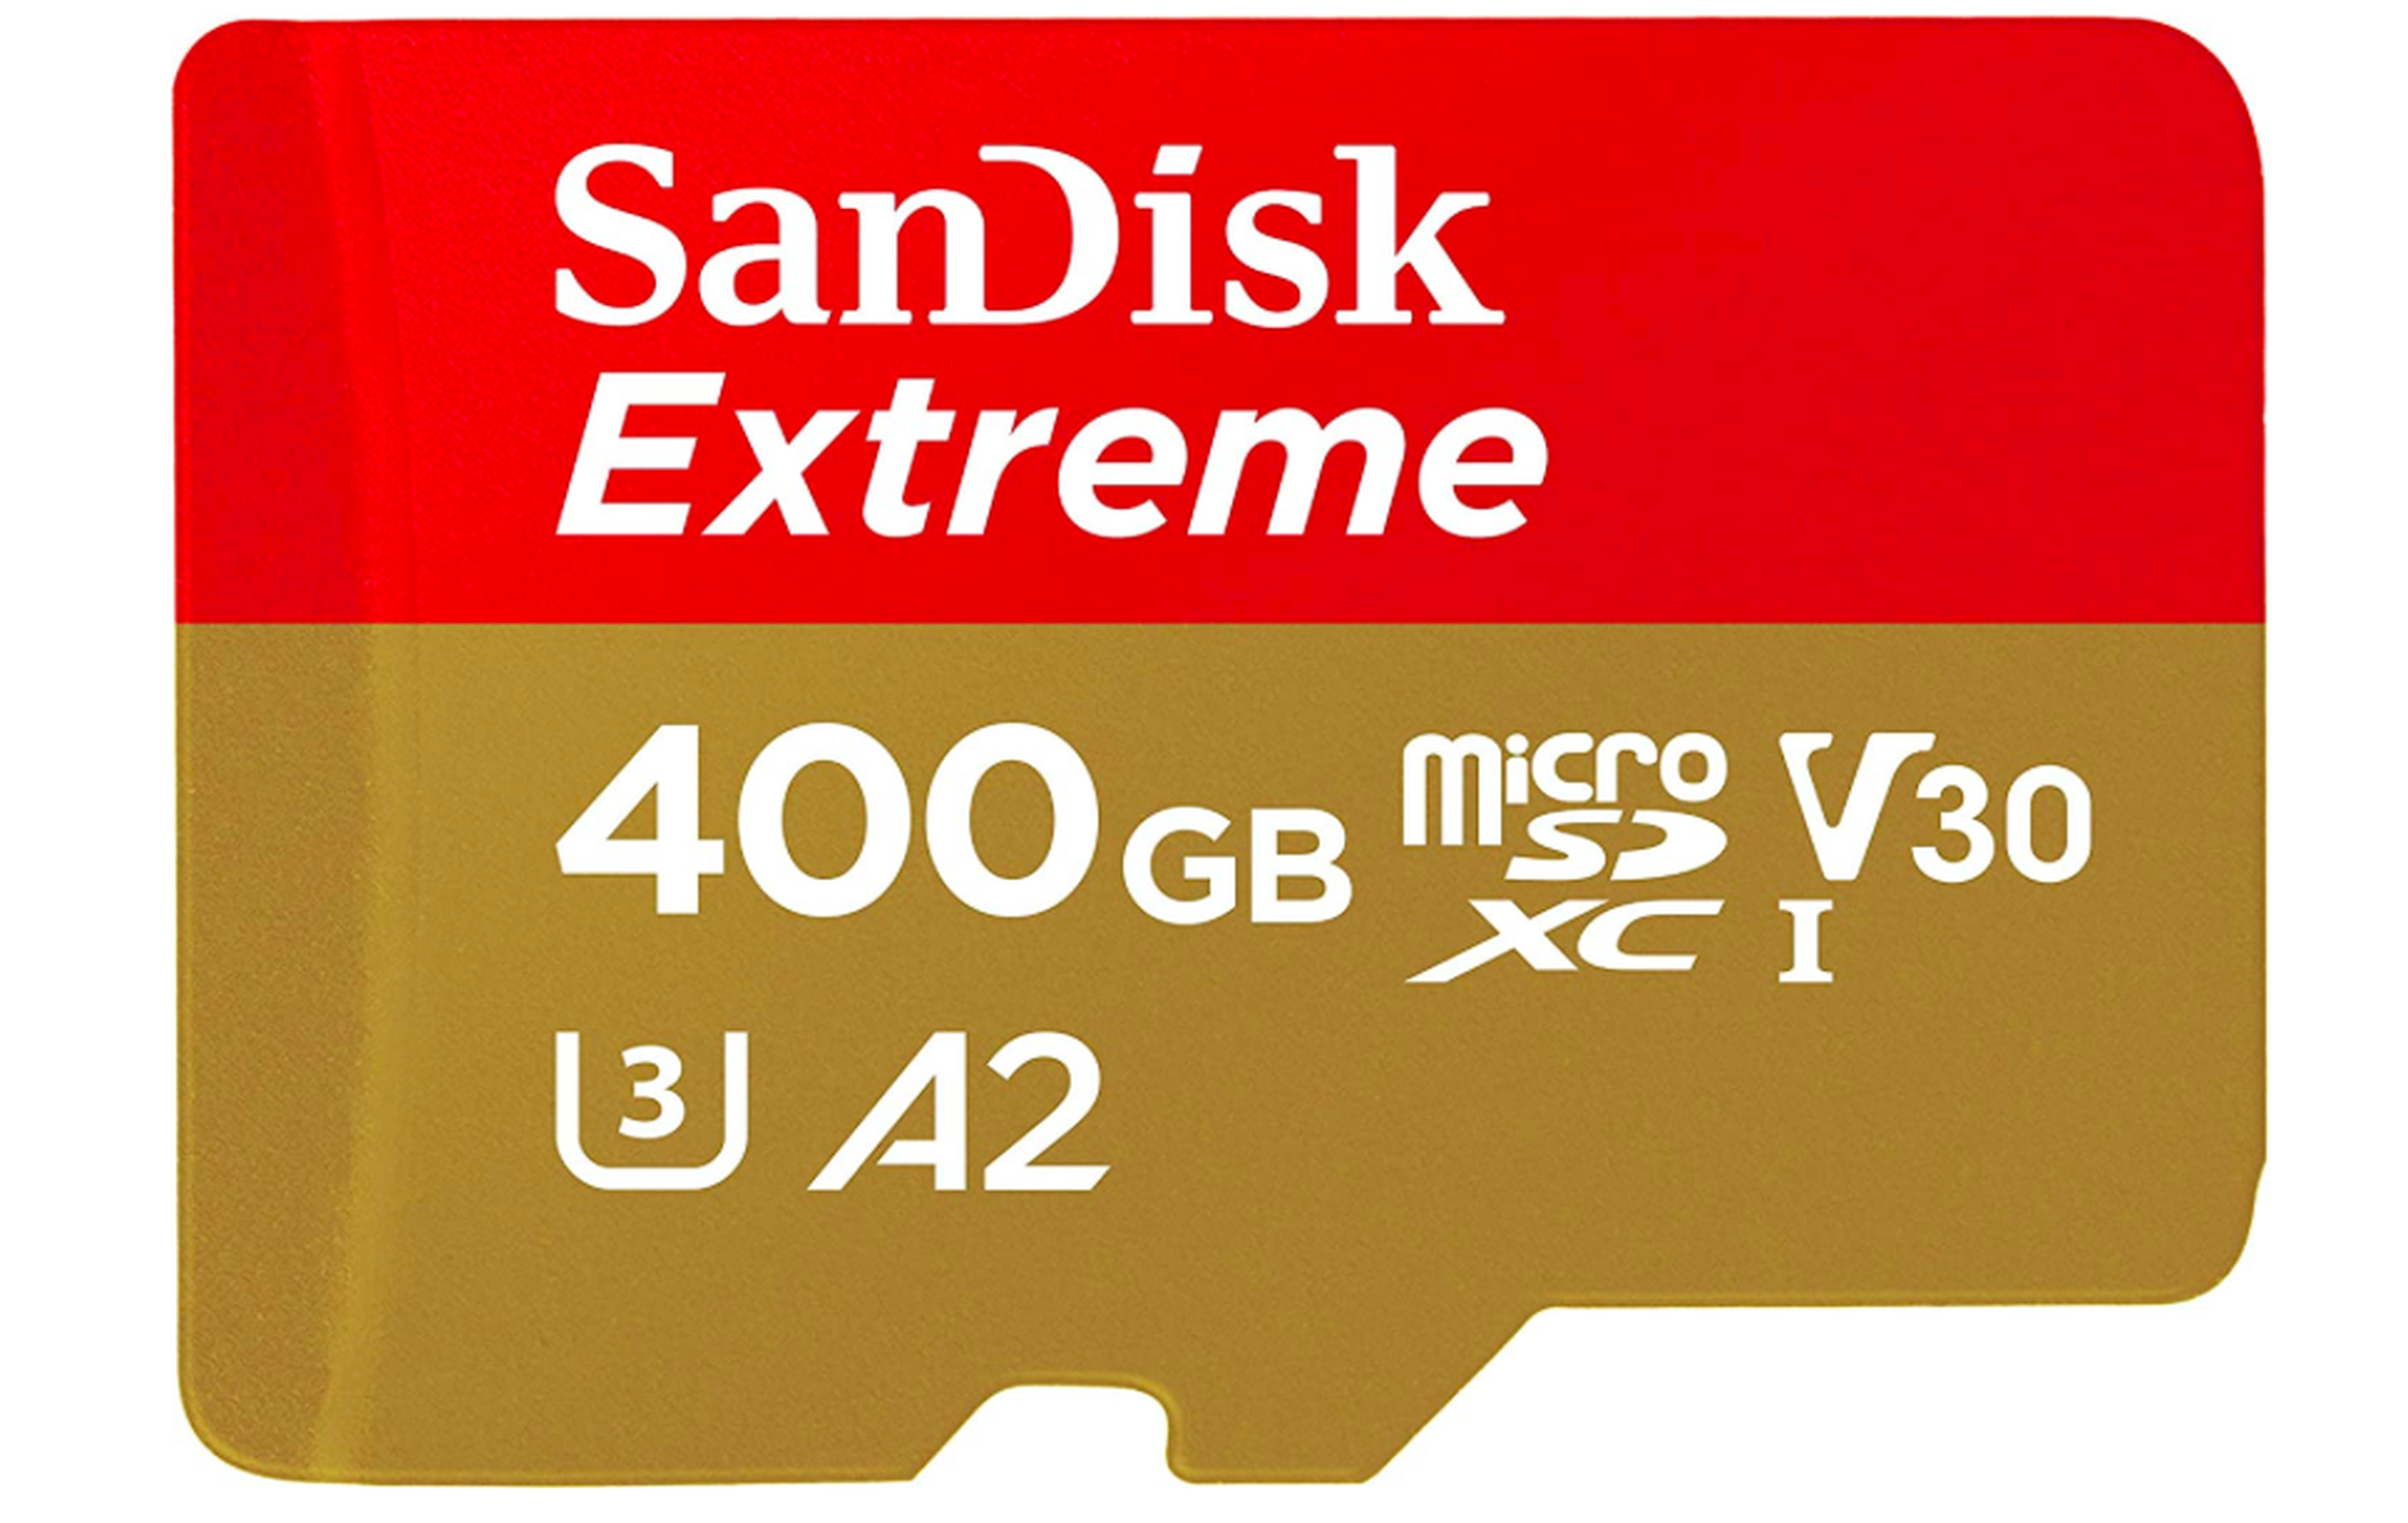 SanDisk Extreme 400 GB.